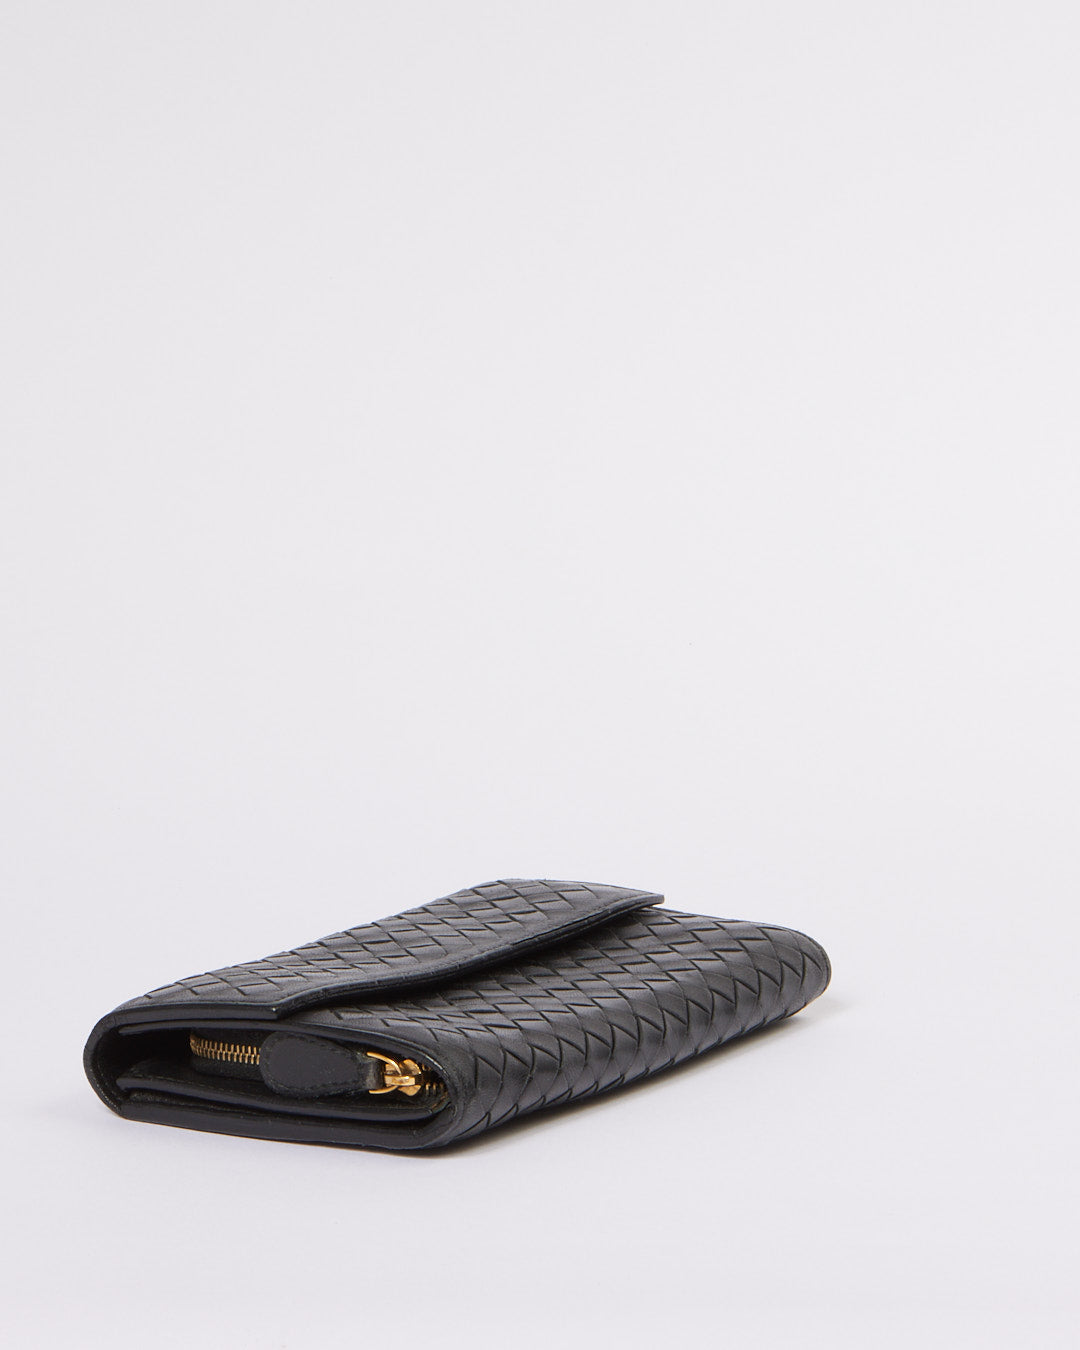 Bottega Veneta Black Intrecciato Leather Continental Flap Wallet